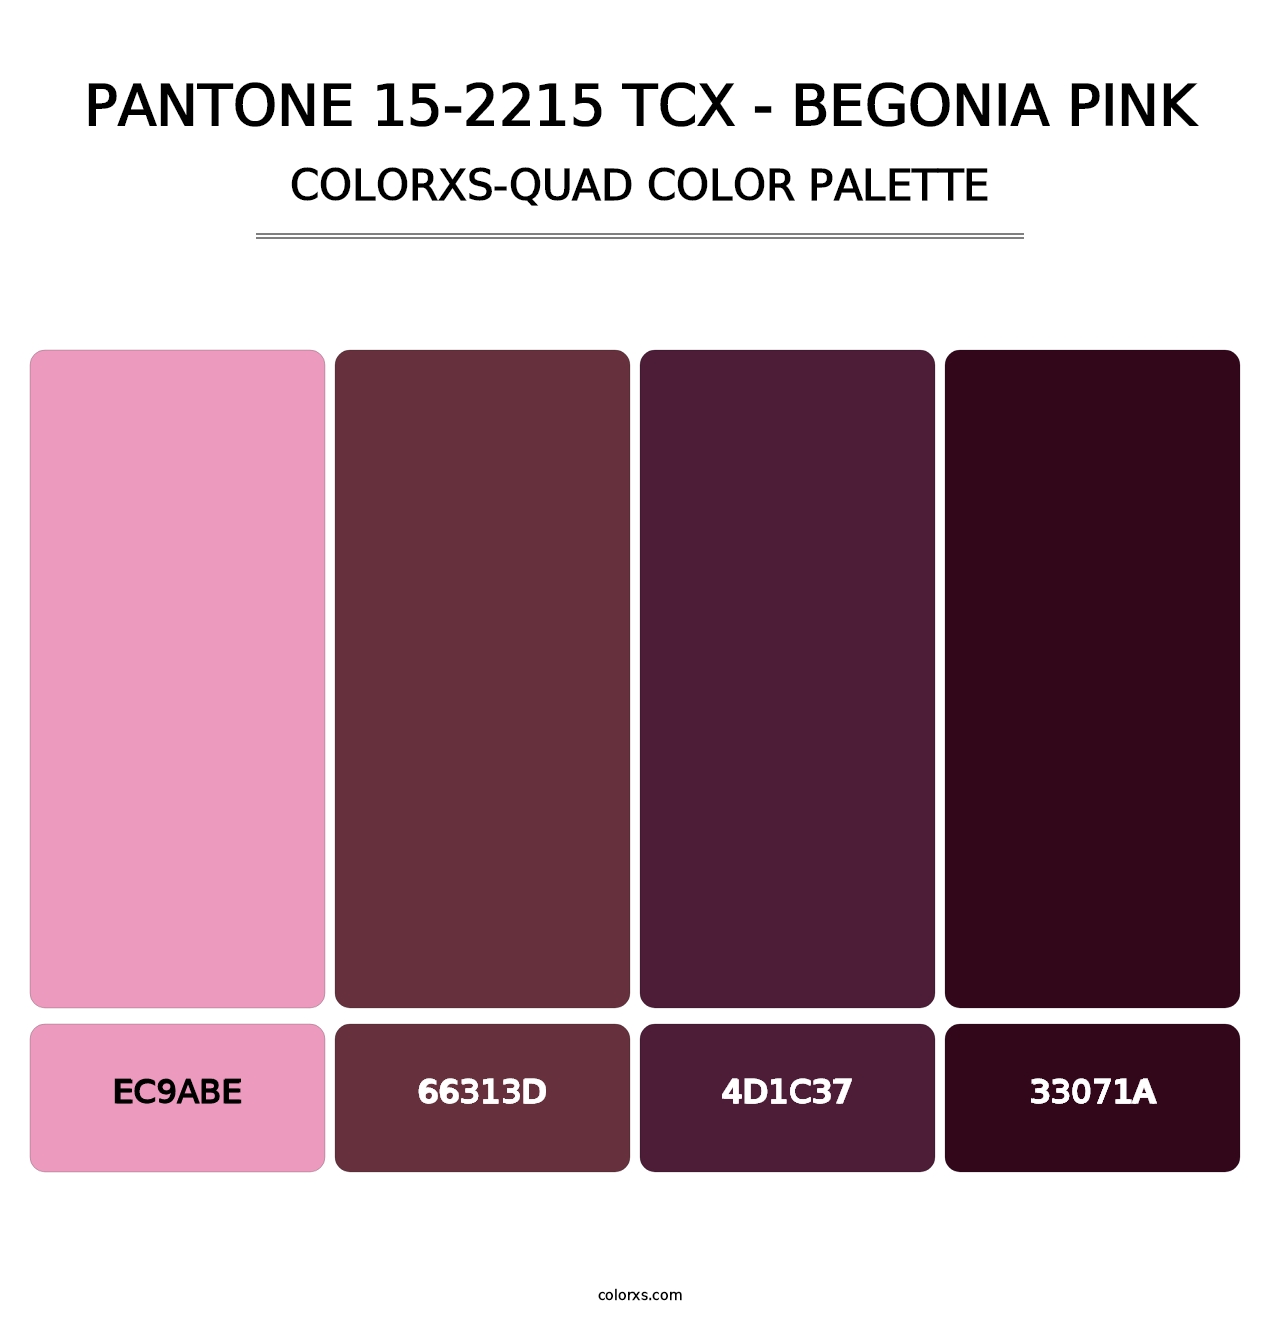 PANTONE 15-2215 TCX - Begonia Pink - Colorxs Quad Palette